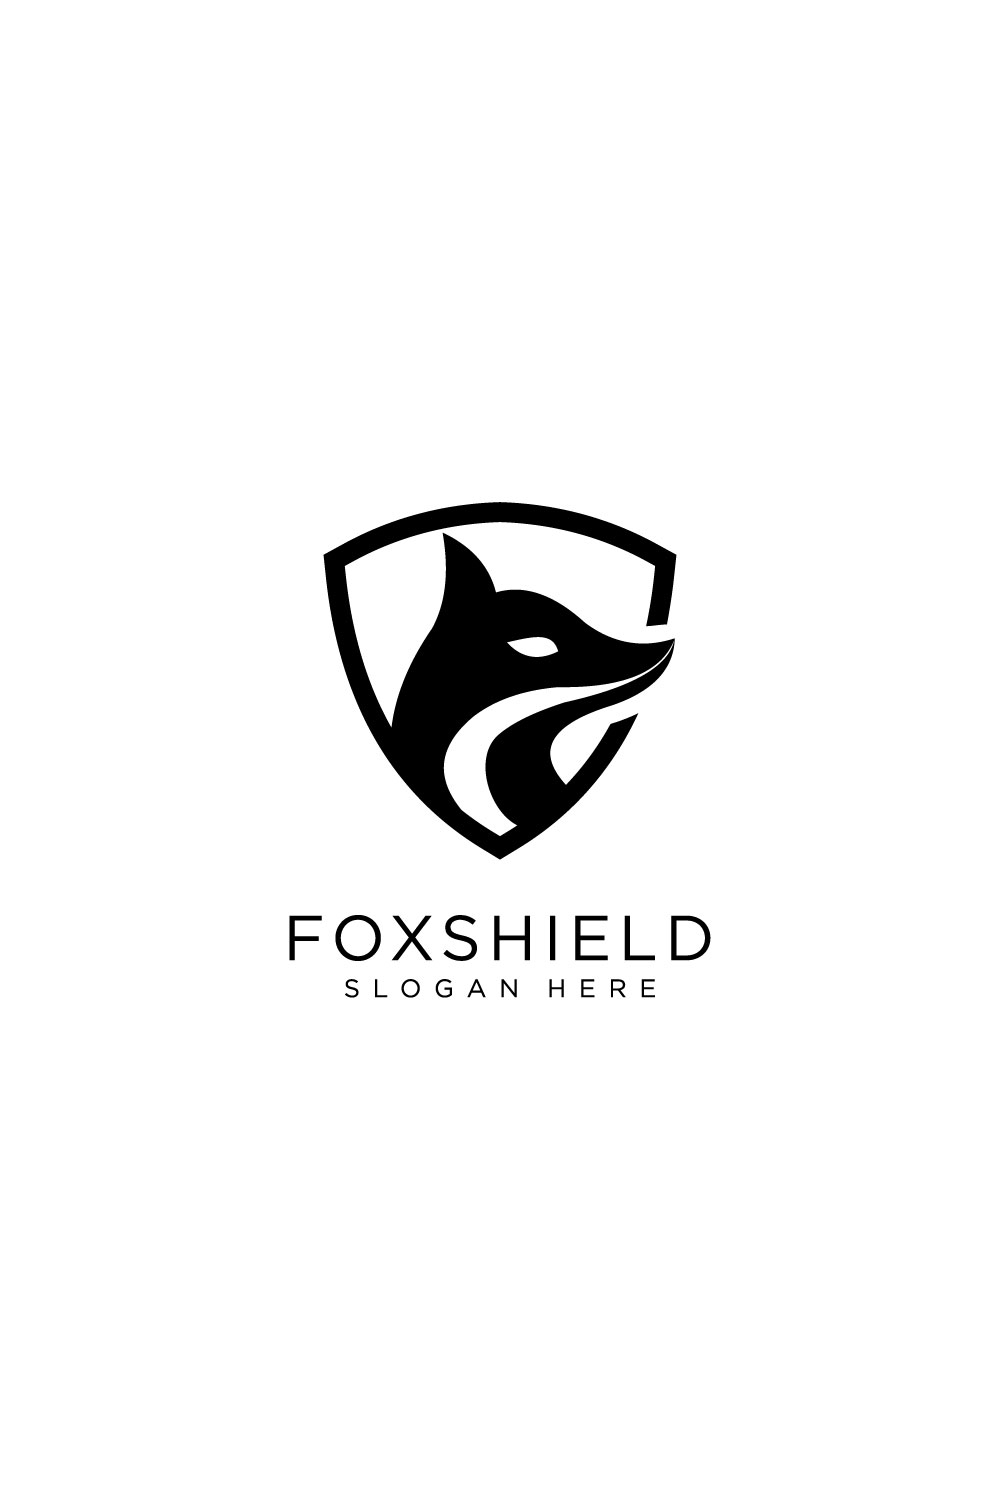 fox shield logo design vector pinterest preview image.